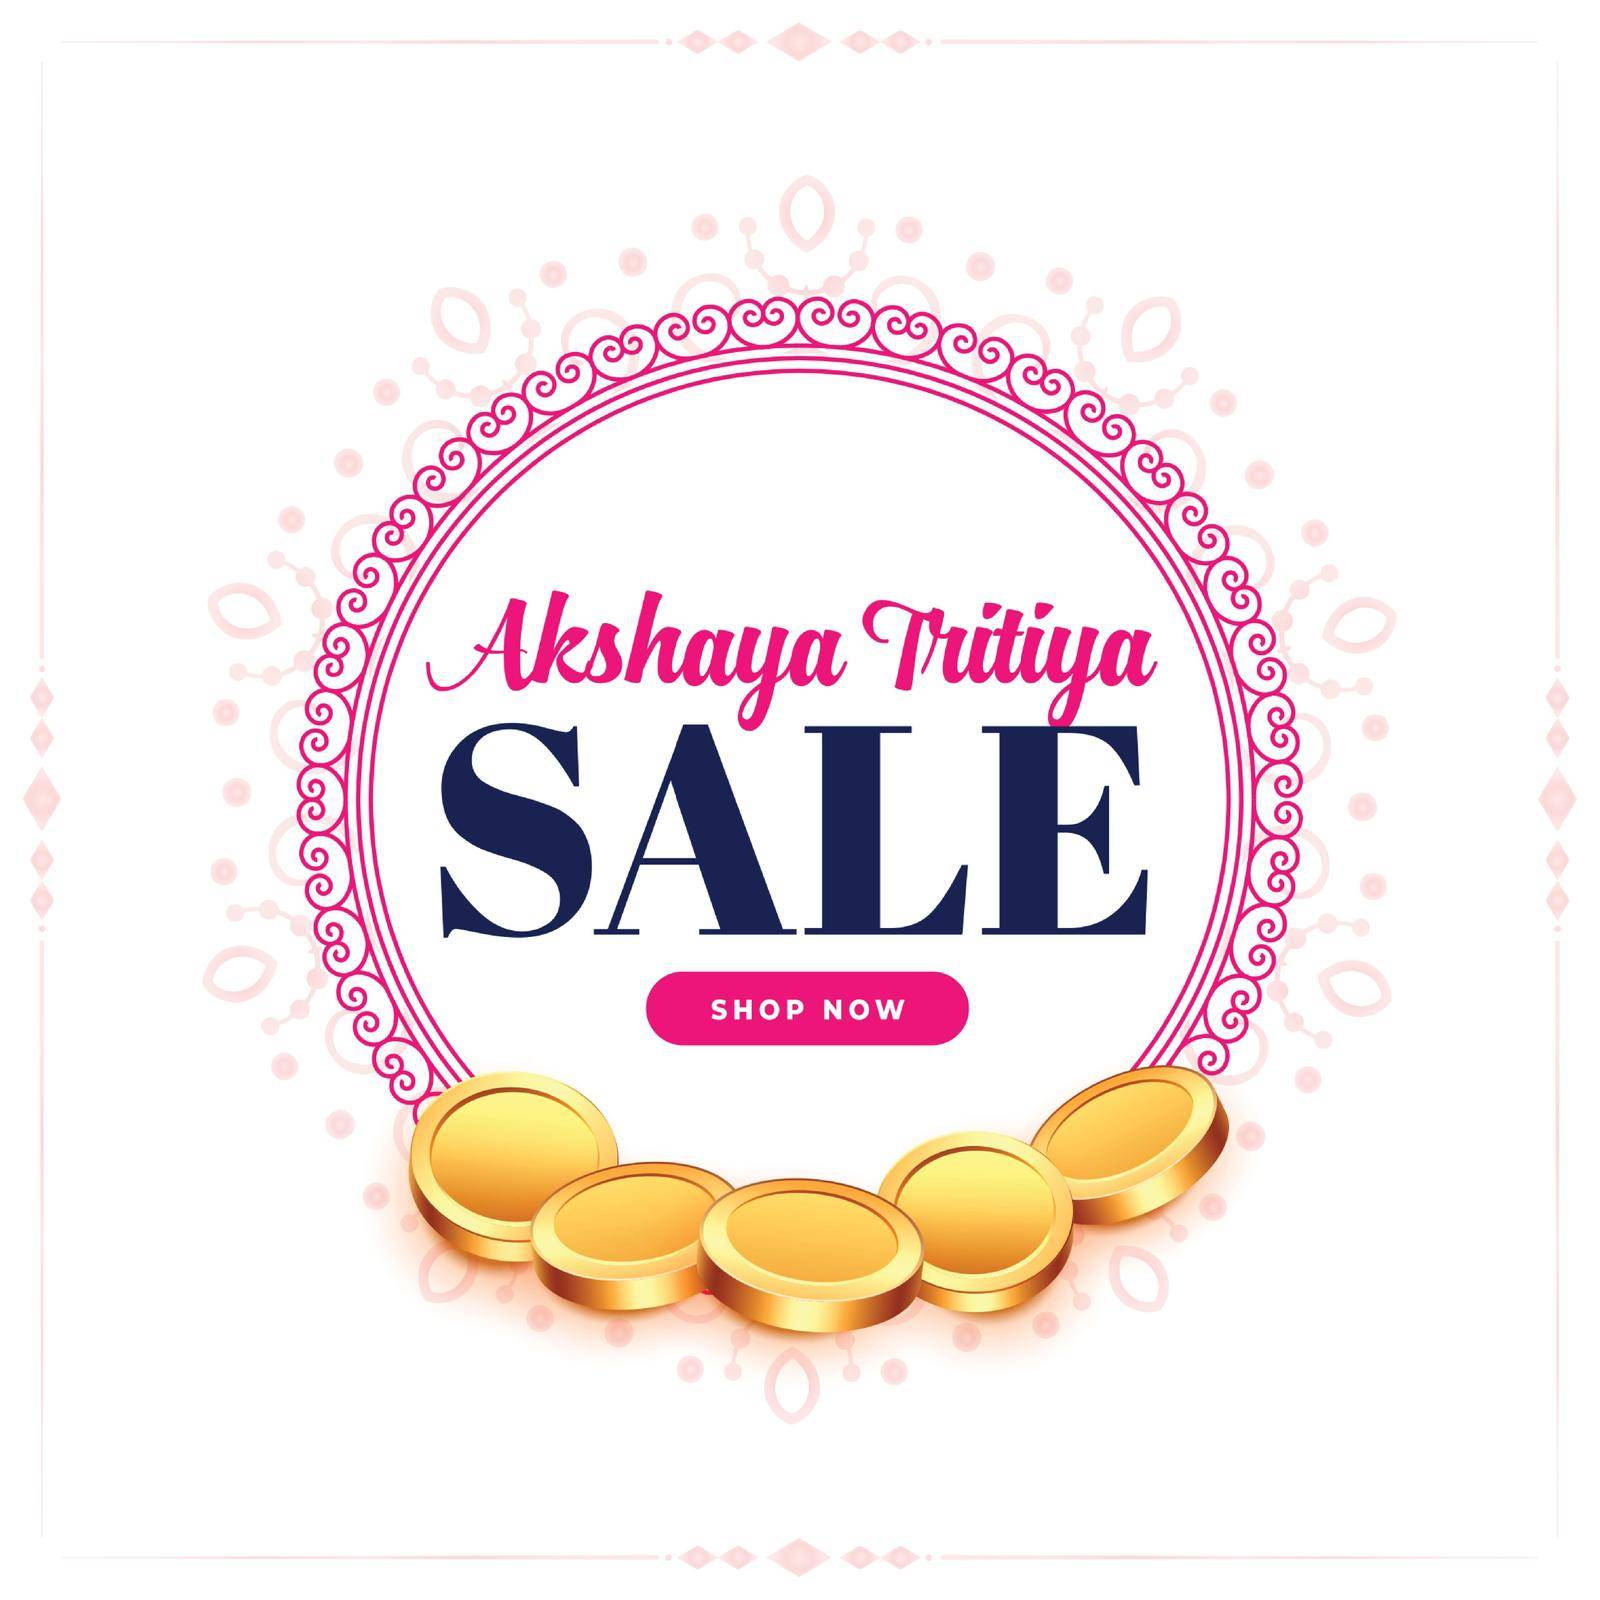 akshaya tritiya sale banner with golden coins